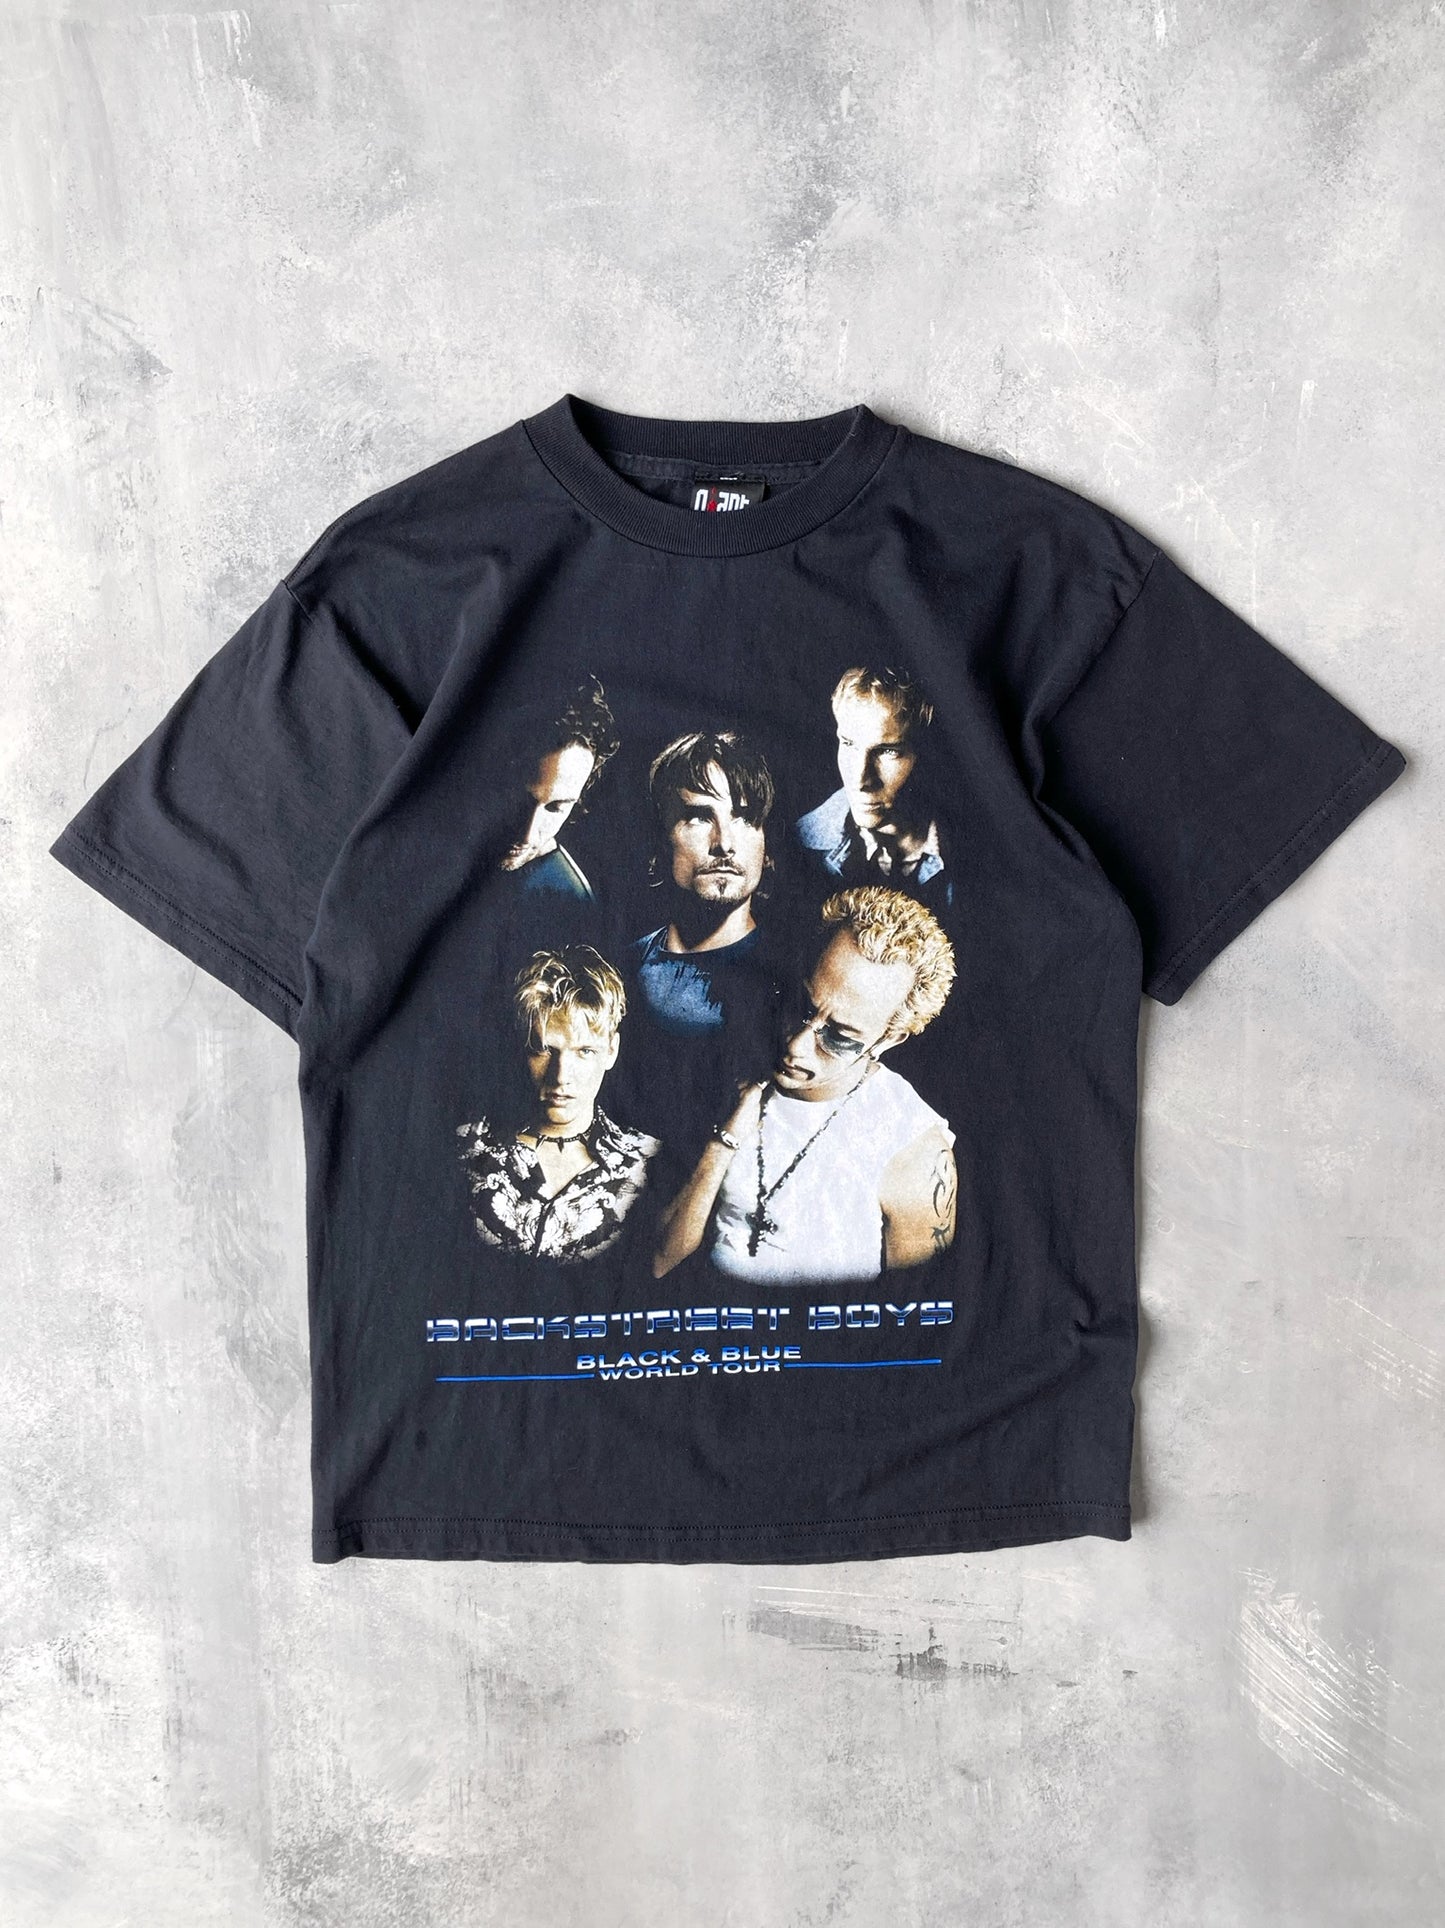 Backstreet Boys Tour T-Shirt '01 - Small